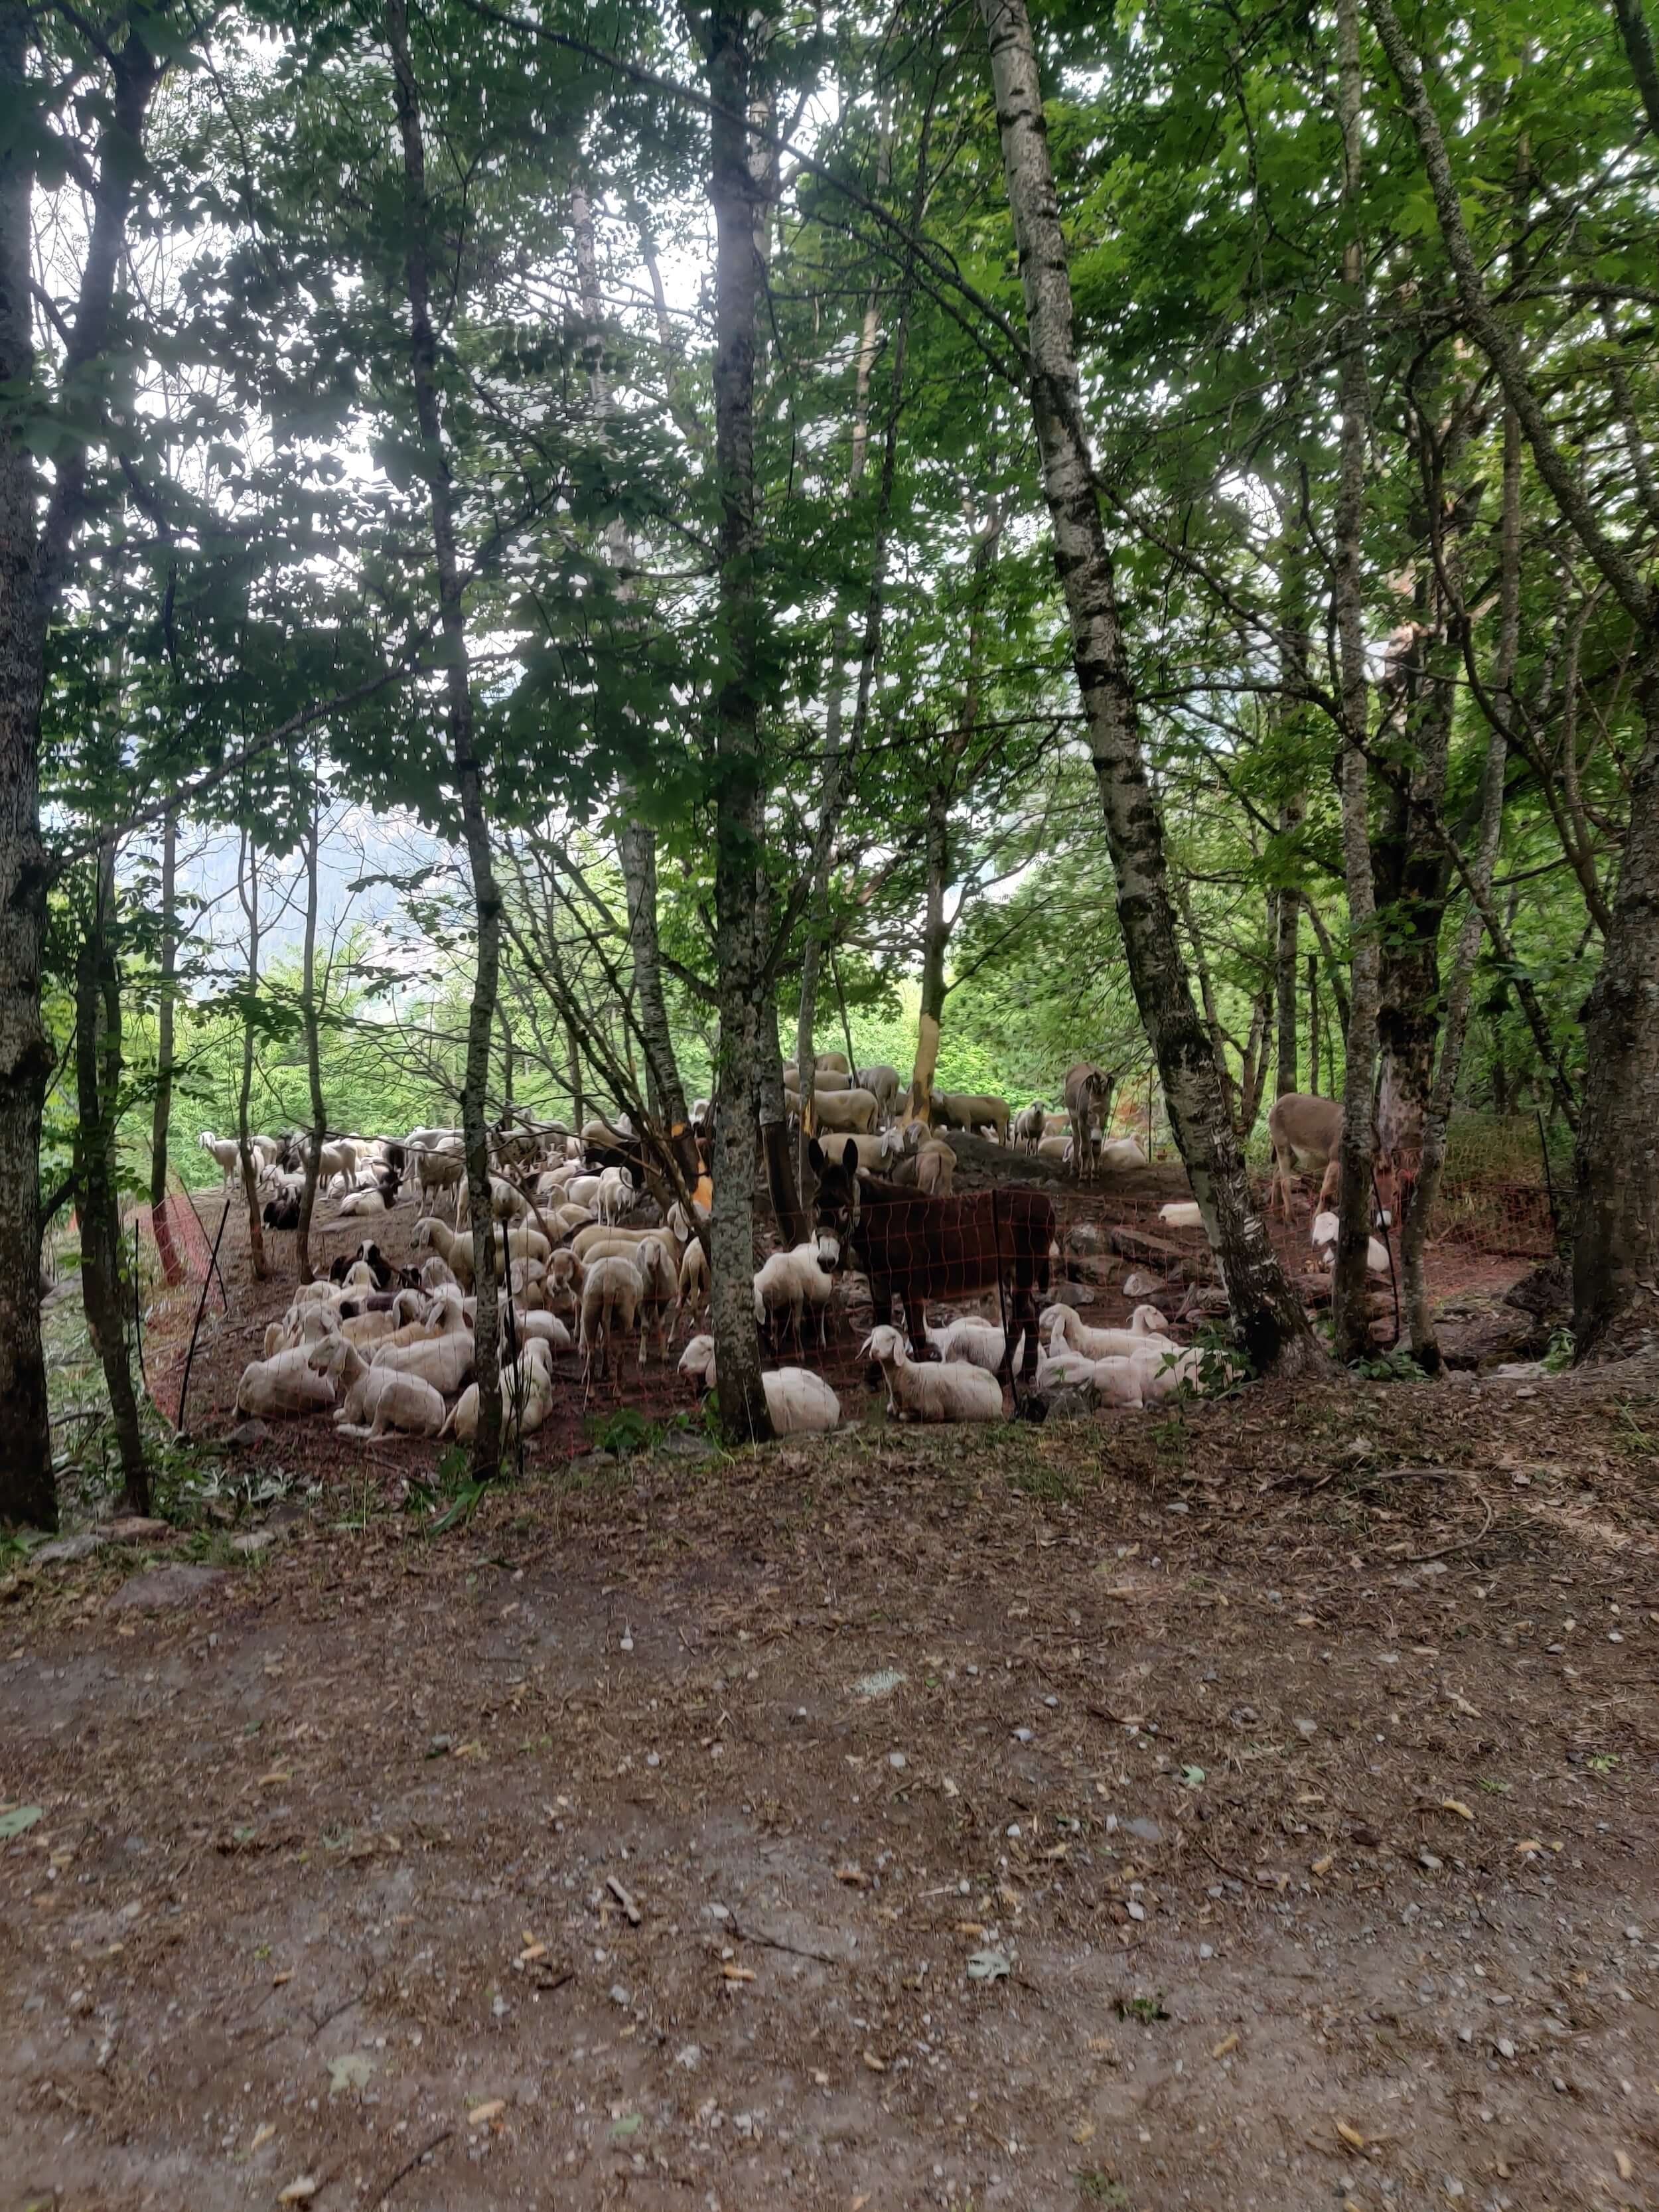 Donkeys and long eared sheep near TMB trail_31 May 2022_resized.jpg